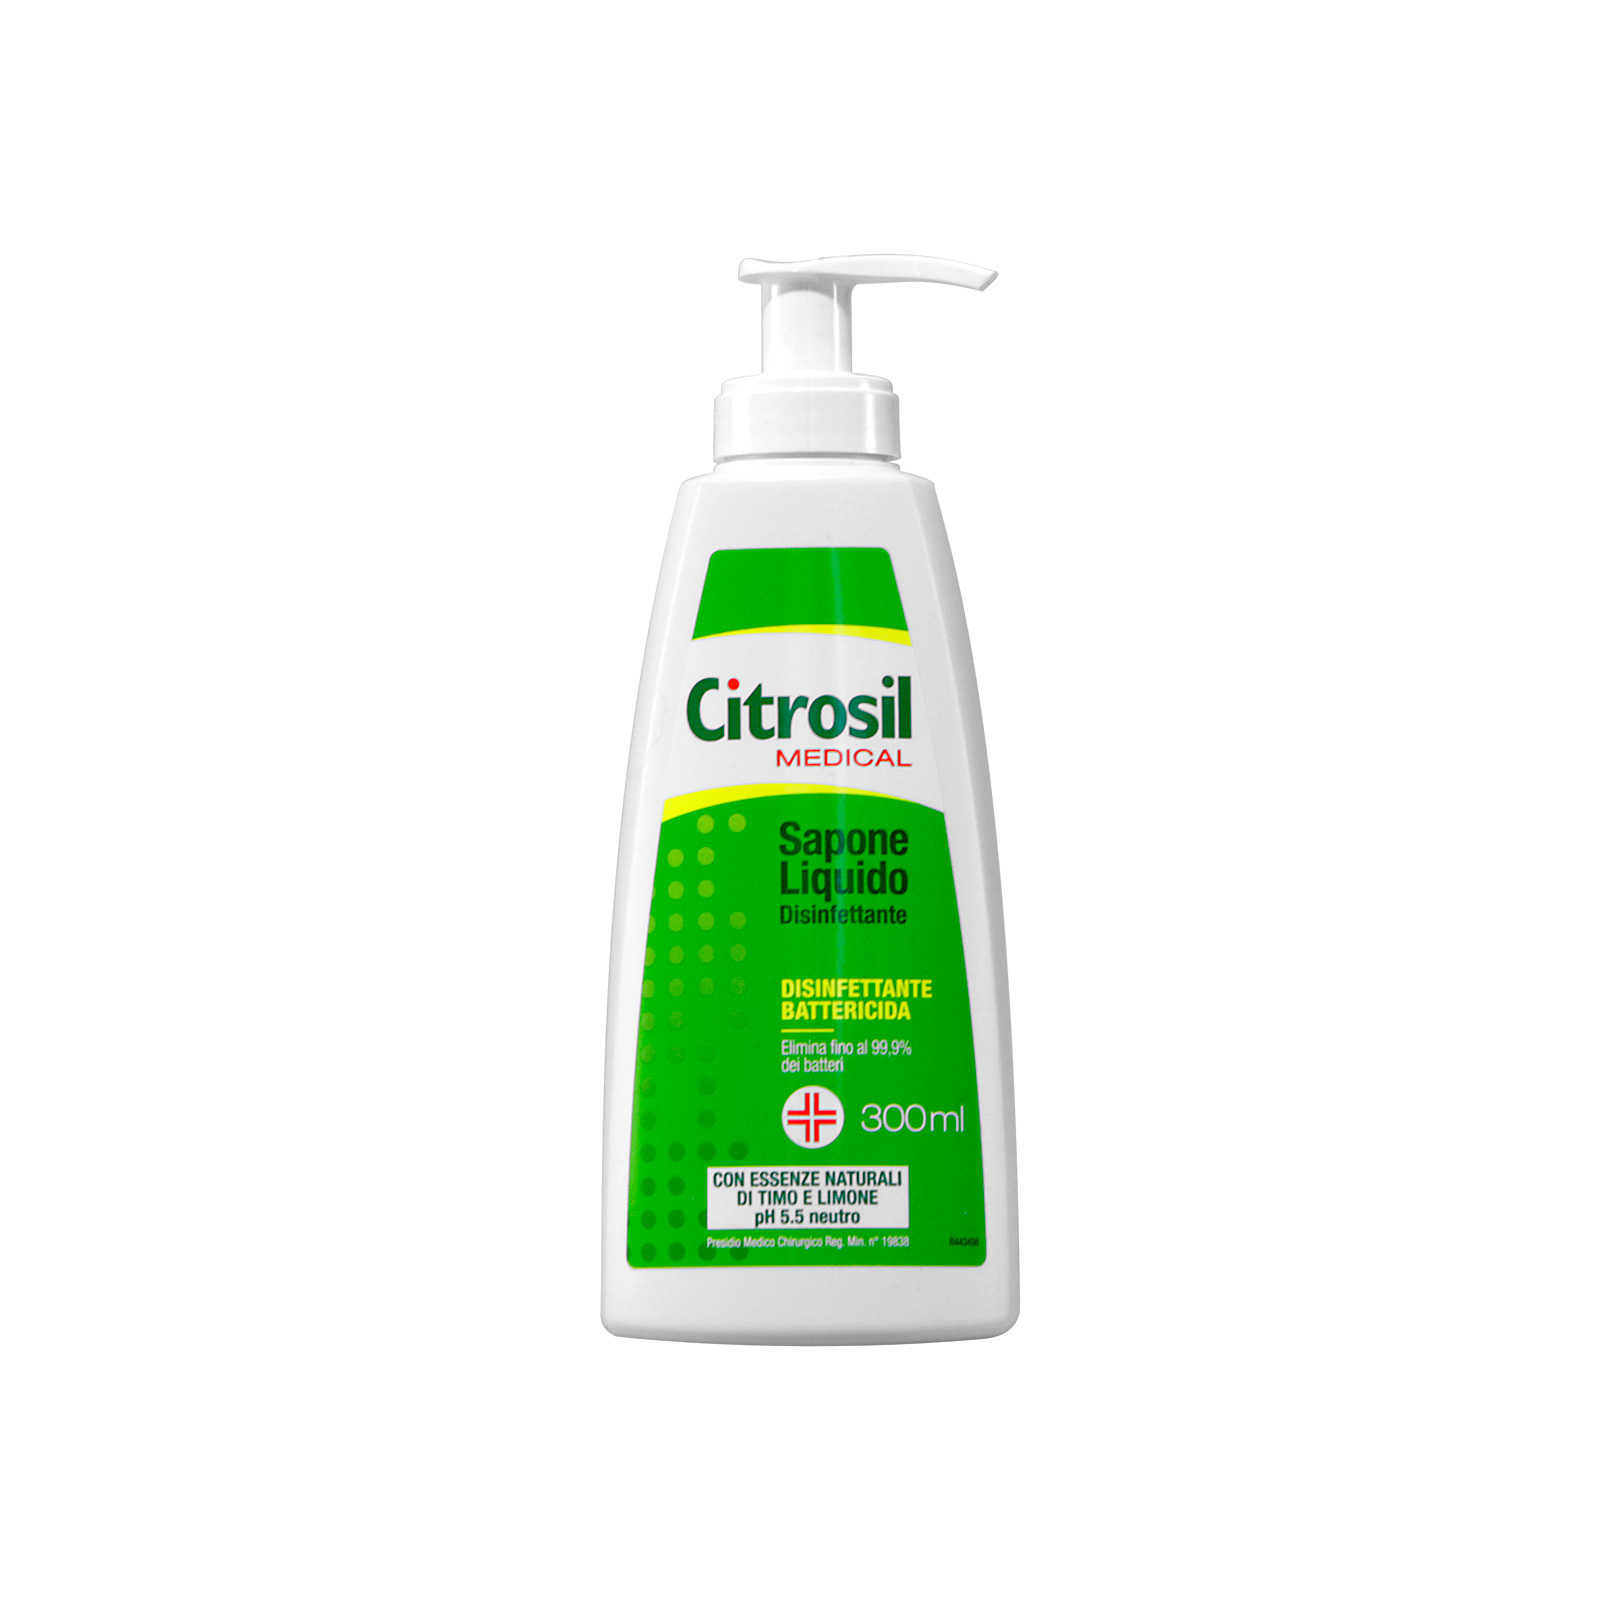 Citrosil - Medical - Sapone Liquido